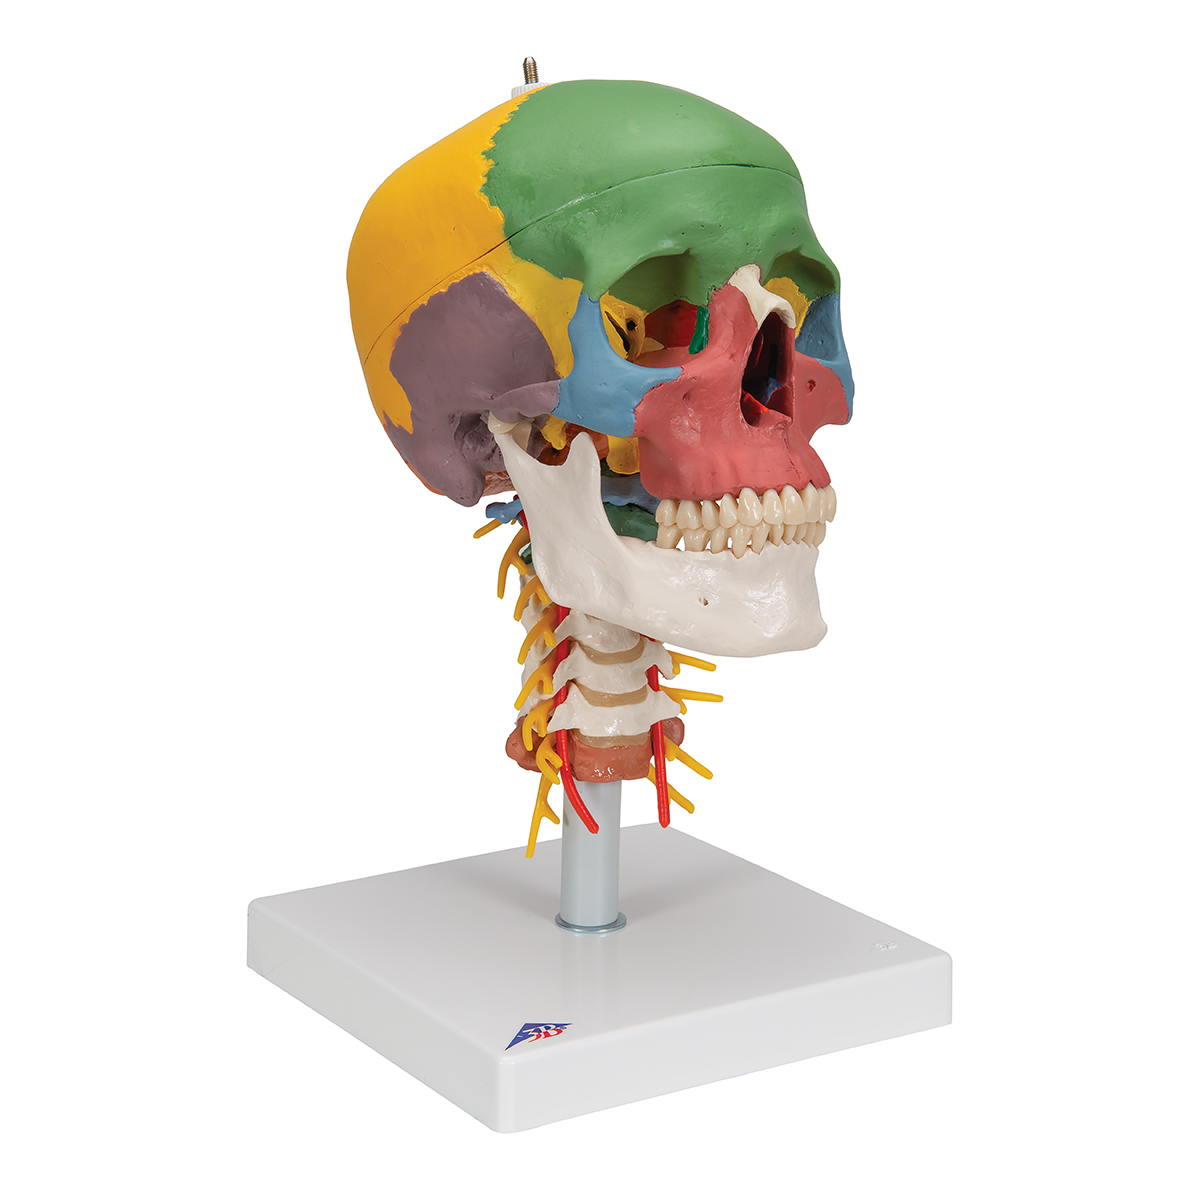 Human Skull Model, Plastic Skull Model